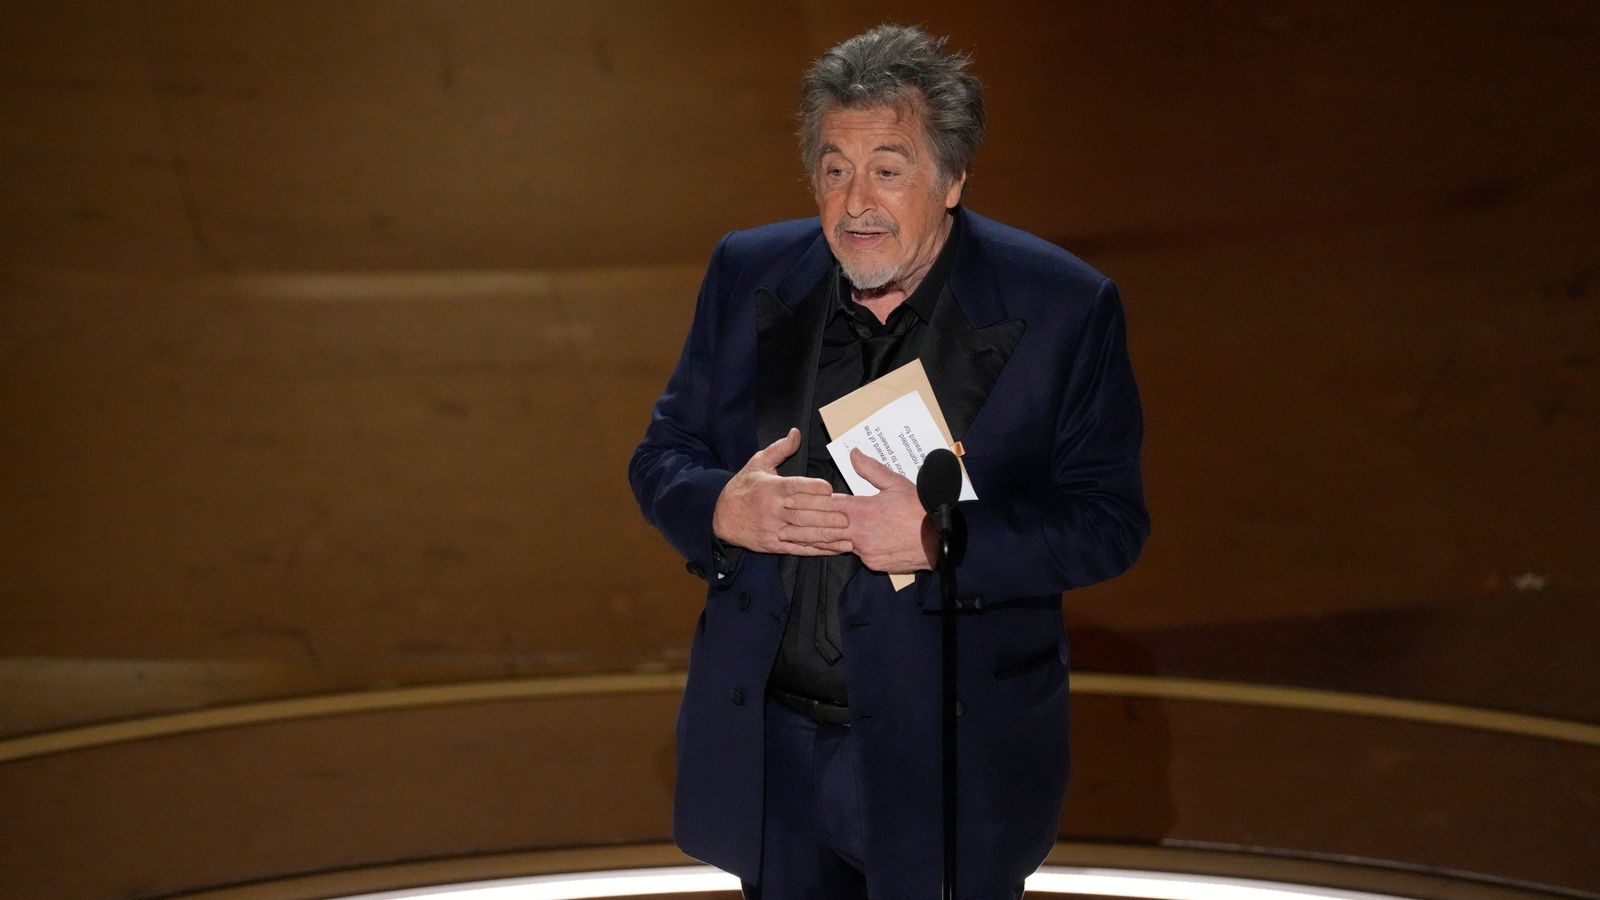 Al Pacino Addresses Controversial Oscars Moment